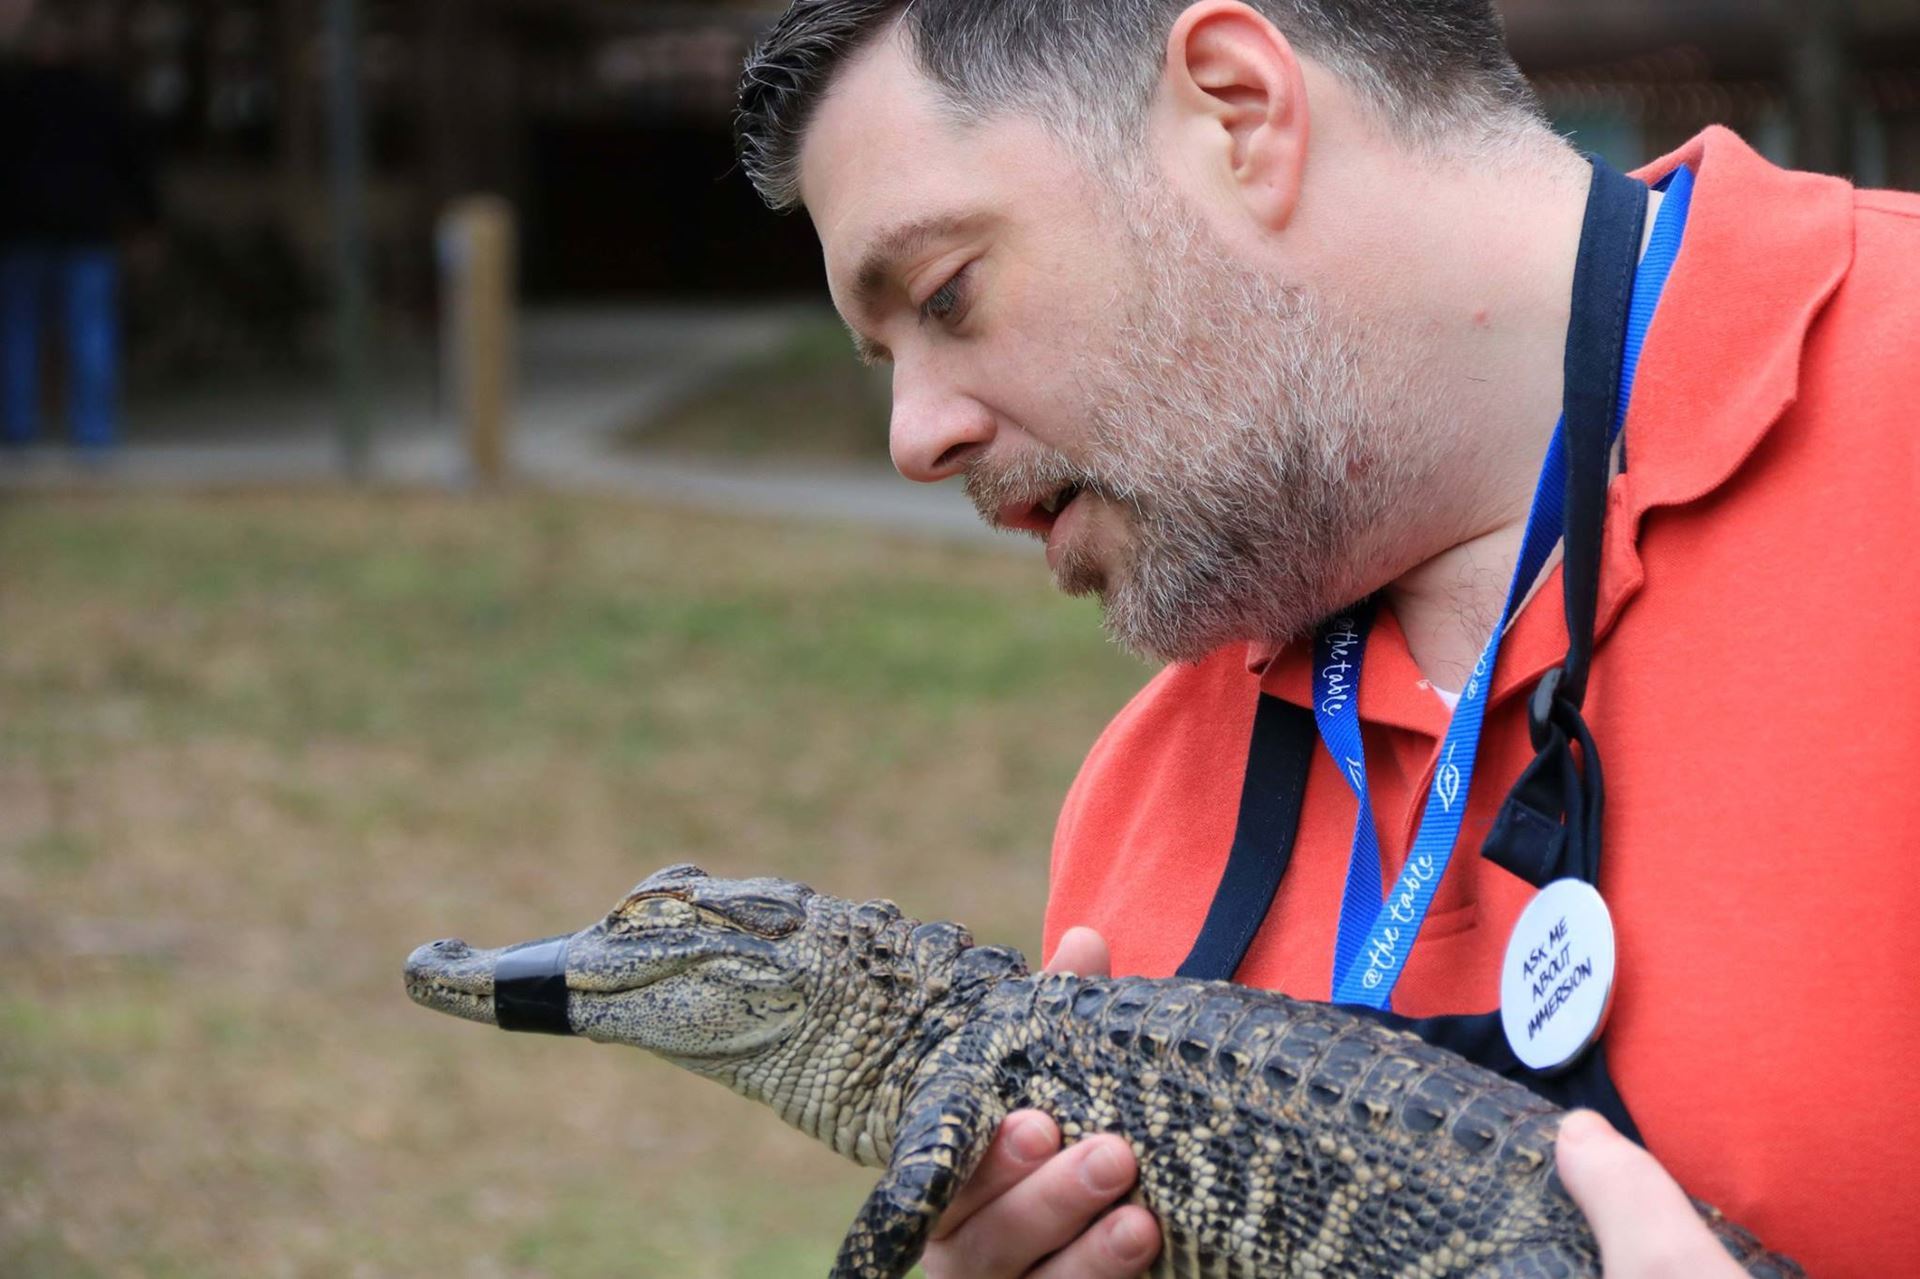 Matt with gator at 2019 National Gathering in Florida